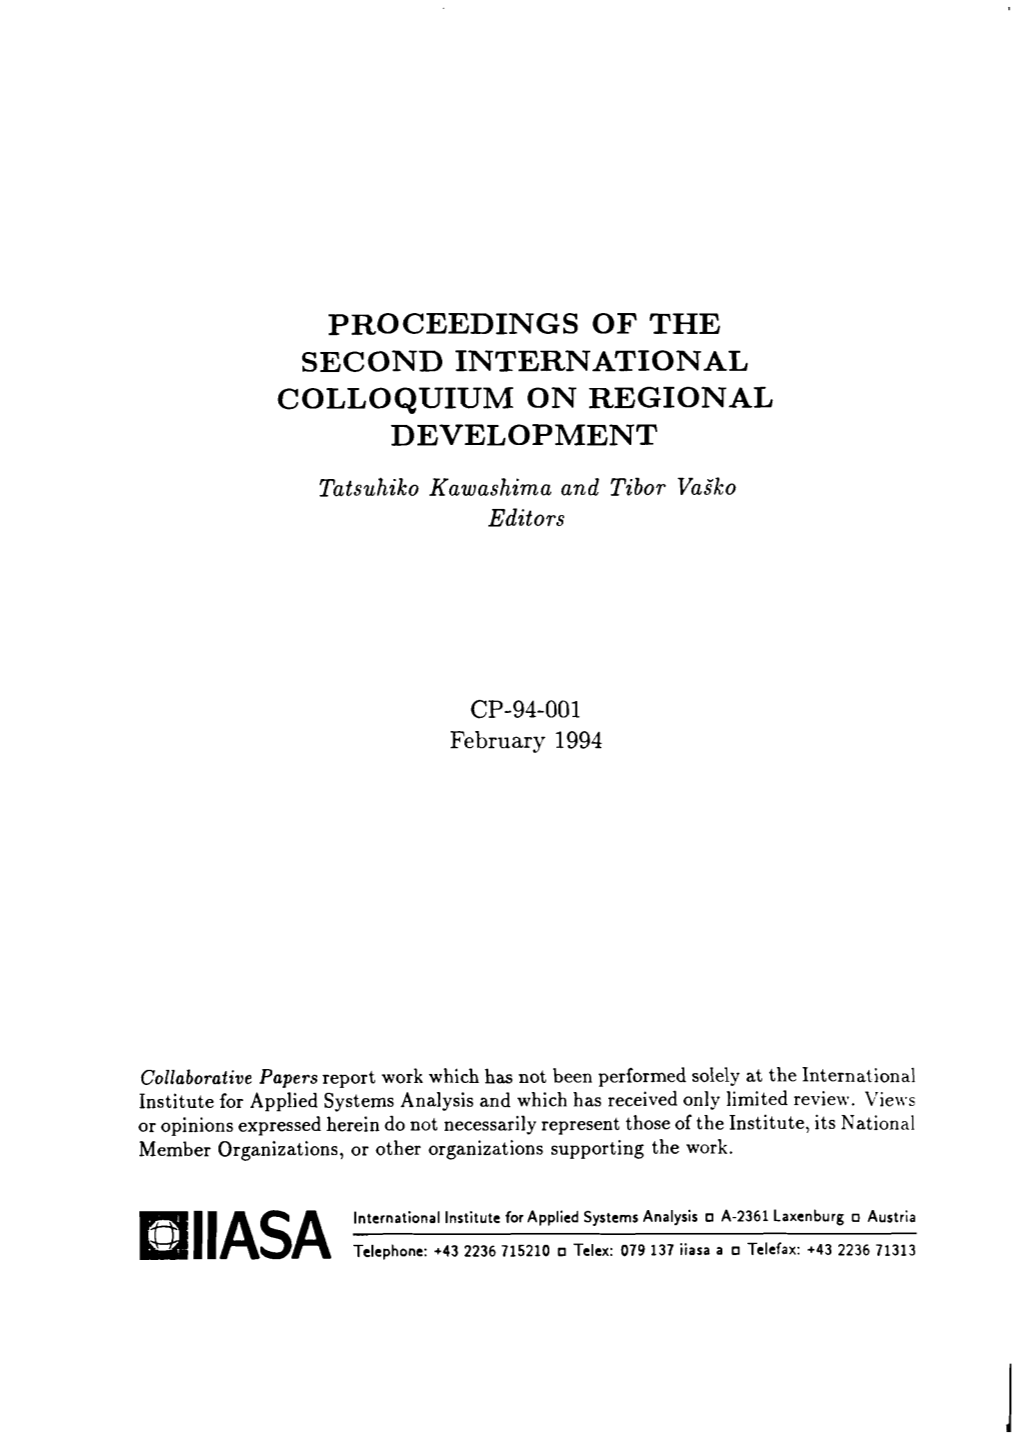 PROCEEDINGS of the SECOND INTERNATIONAL COLLOQUIUM on REGIONAL DEVELOPMENT Tatsuhiko Kawashirna and Tibor Vas'ko Editors